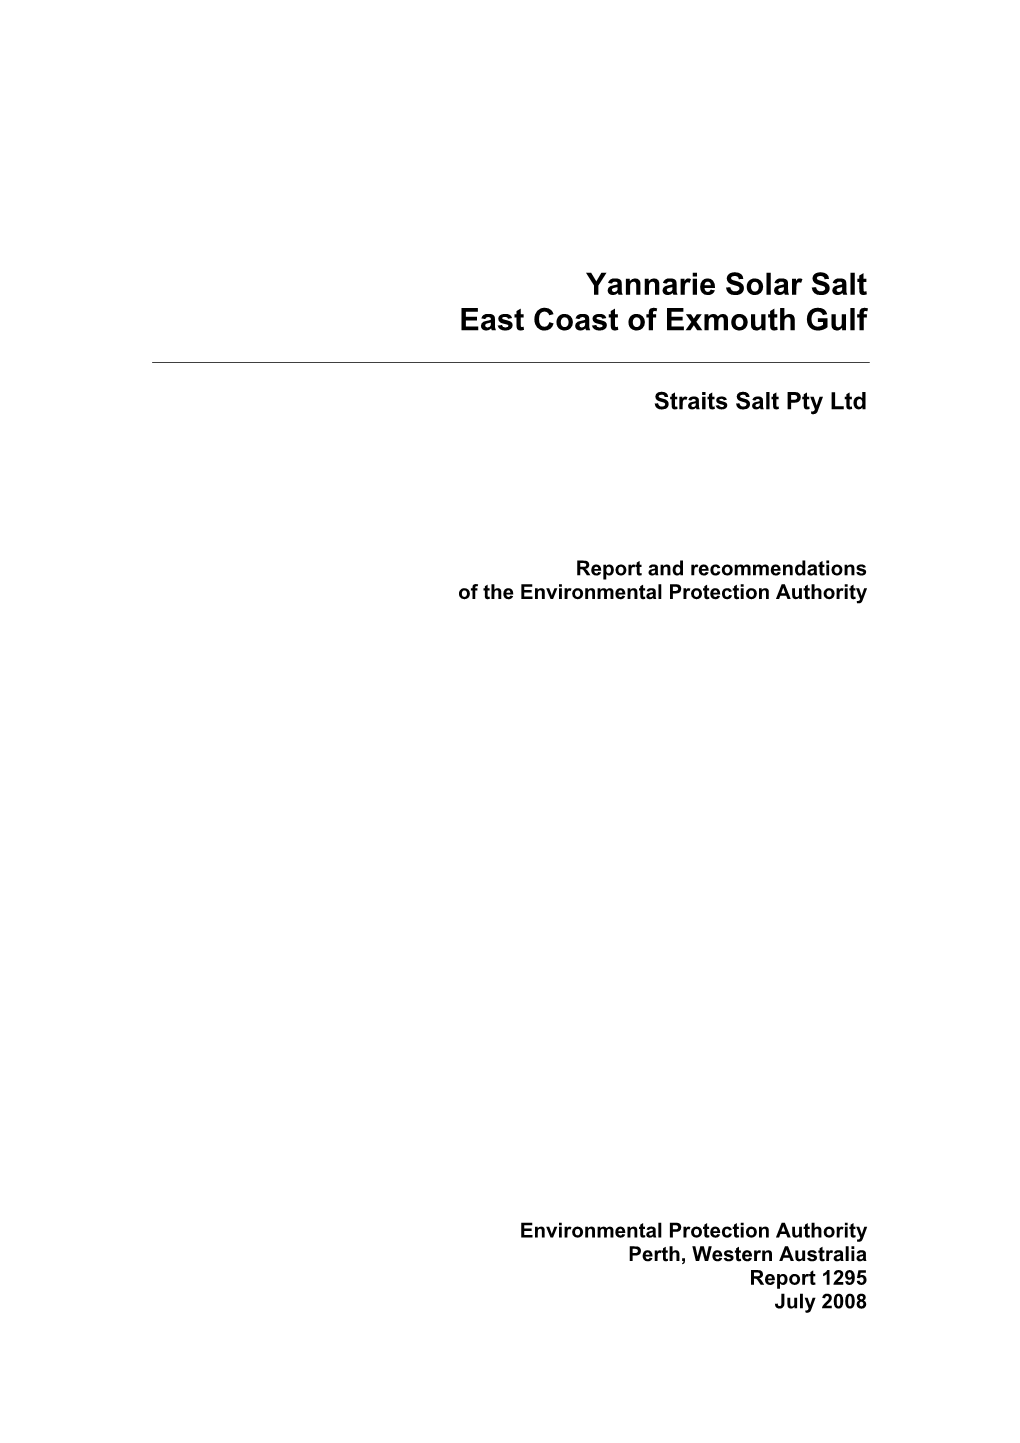 Yannarie Solar Salt East Coast of Exmouth Gulf